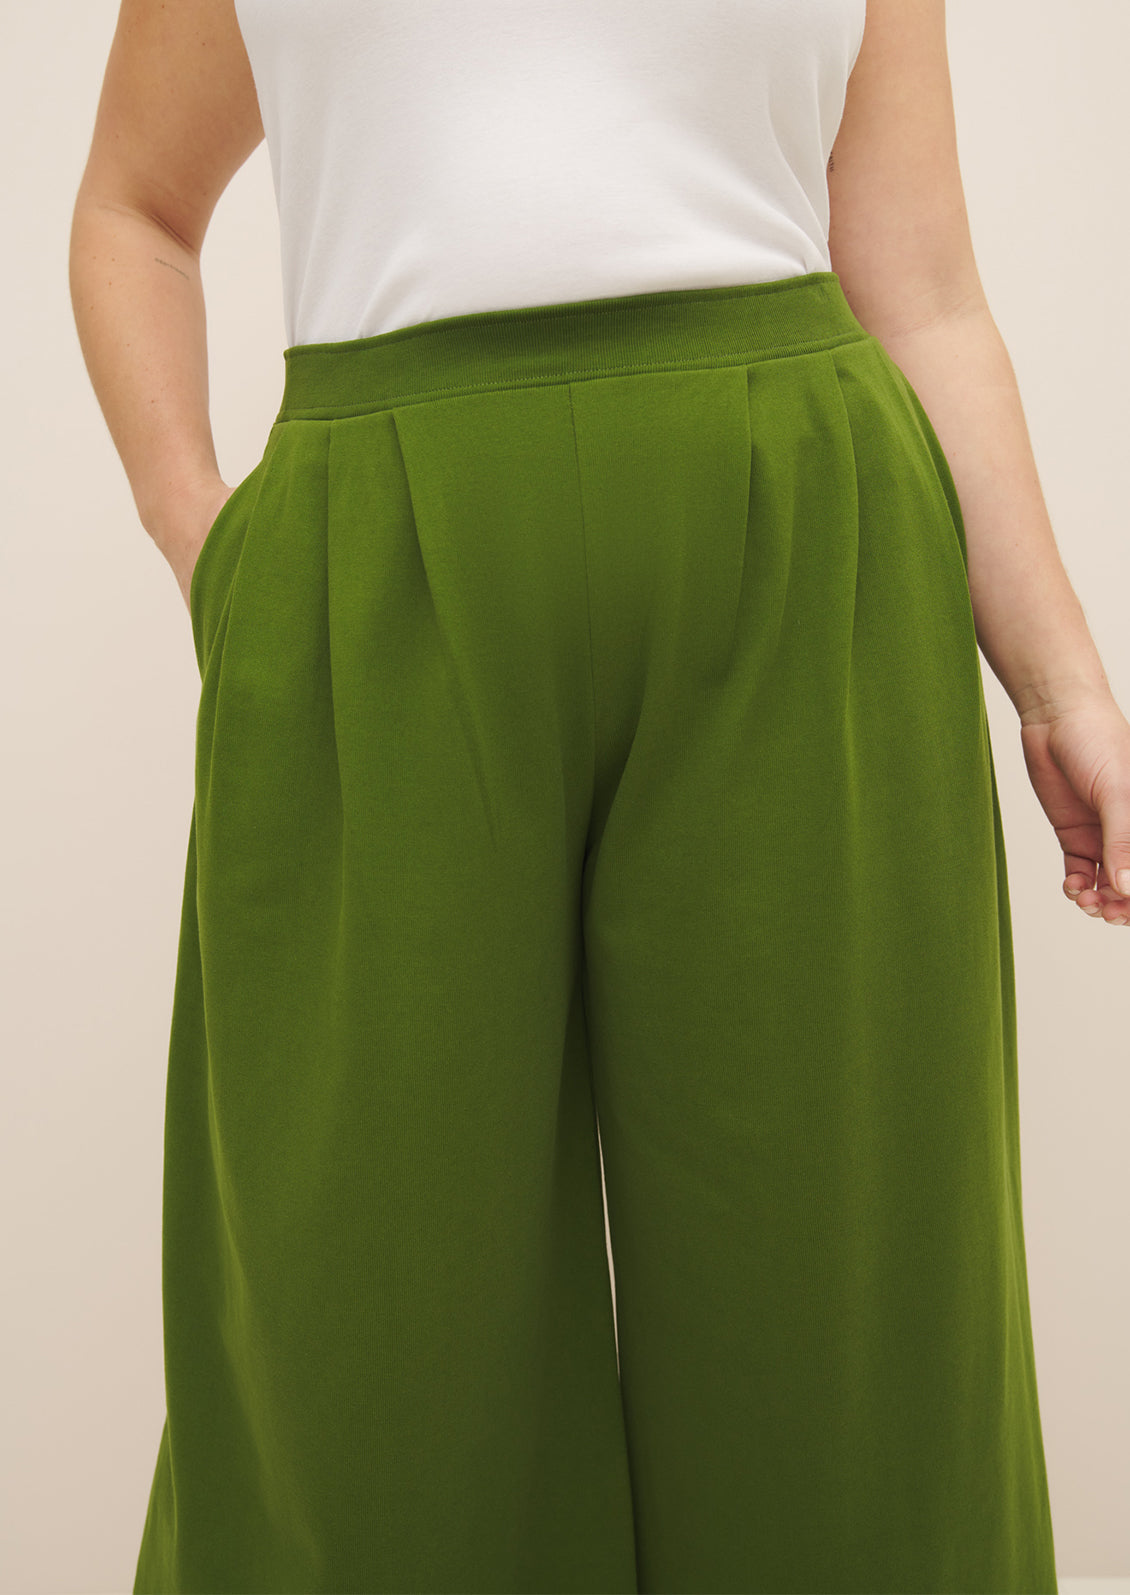 A woman wearing a pair of flowy, wide leg green pants.